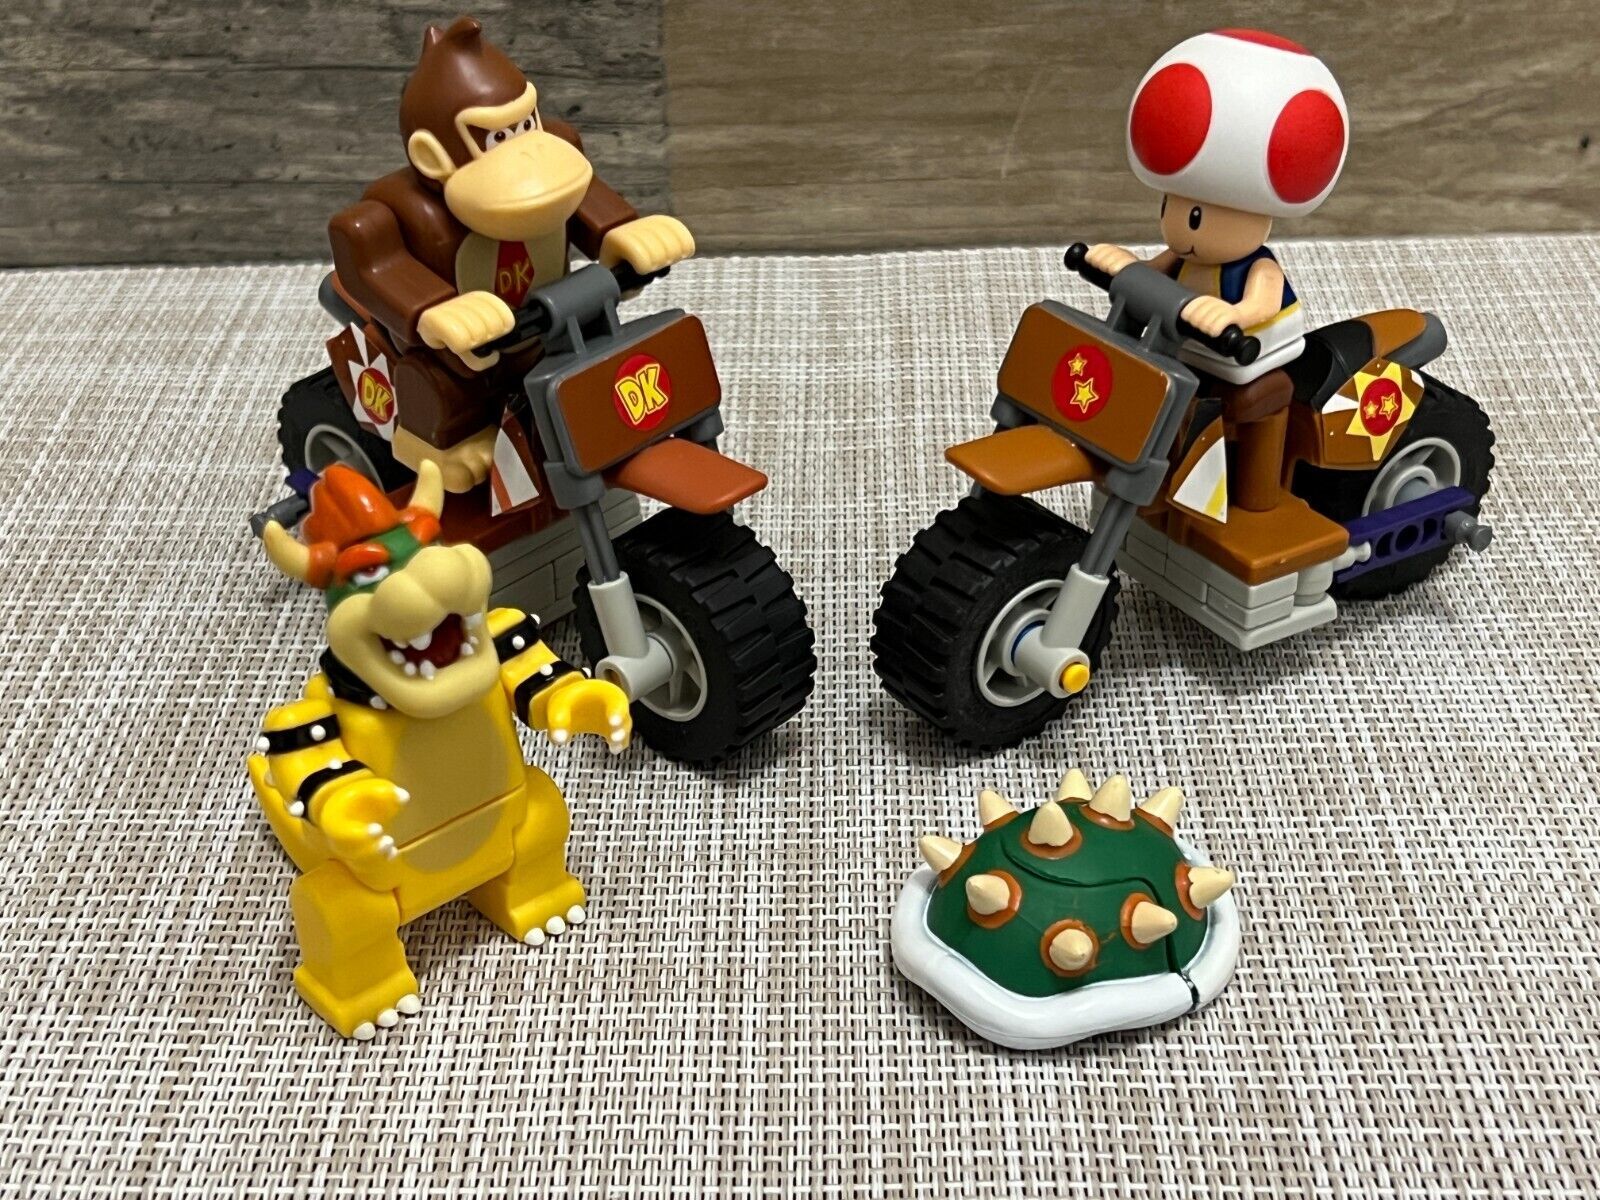 K'NEX Super Mario Bros. Bowser Toad DK Shell & Motorcycles Nintendo Minifigures - $23.21